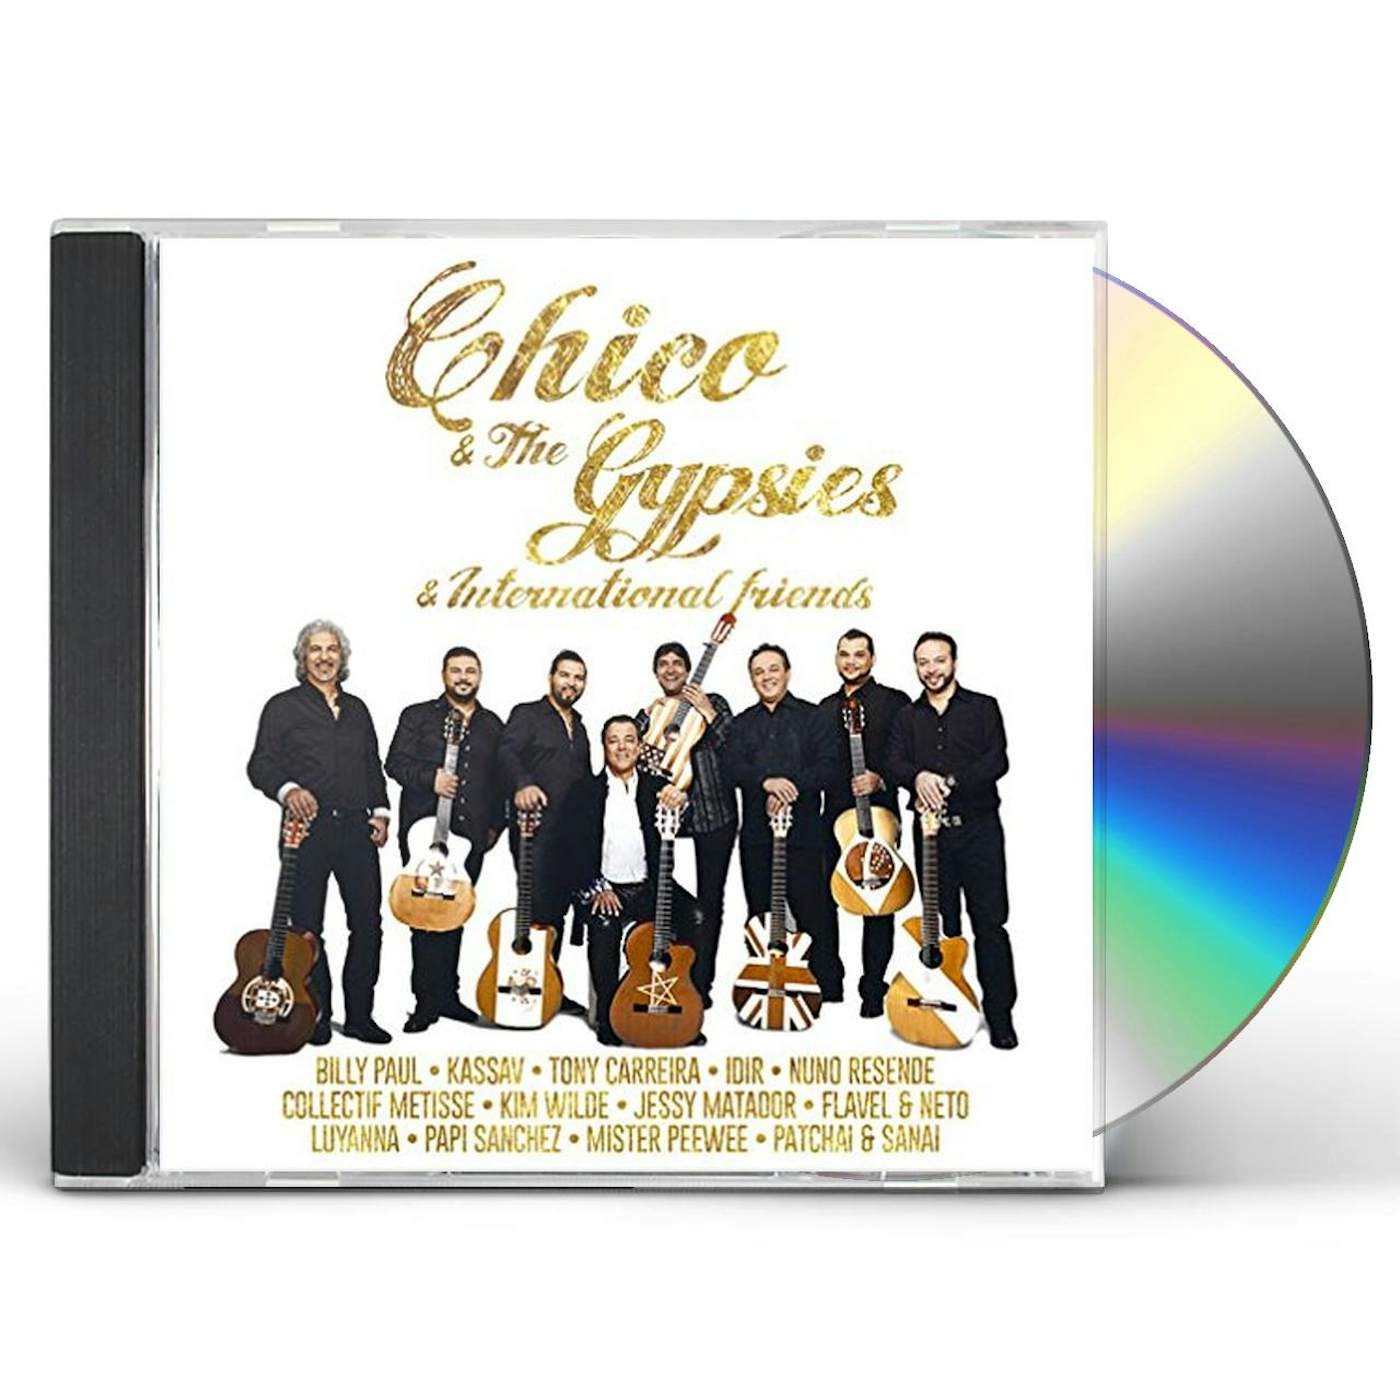 CHICO & THE GYPSIES & INTERNATIONAL FRIENDS CD